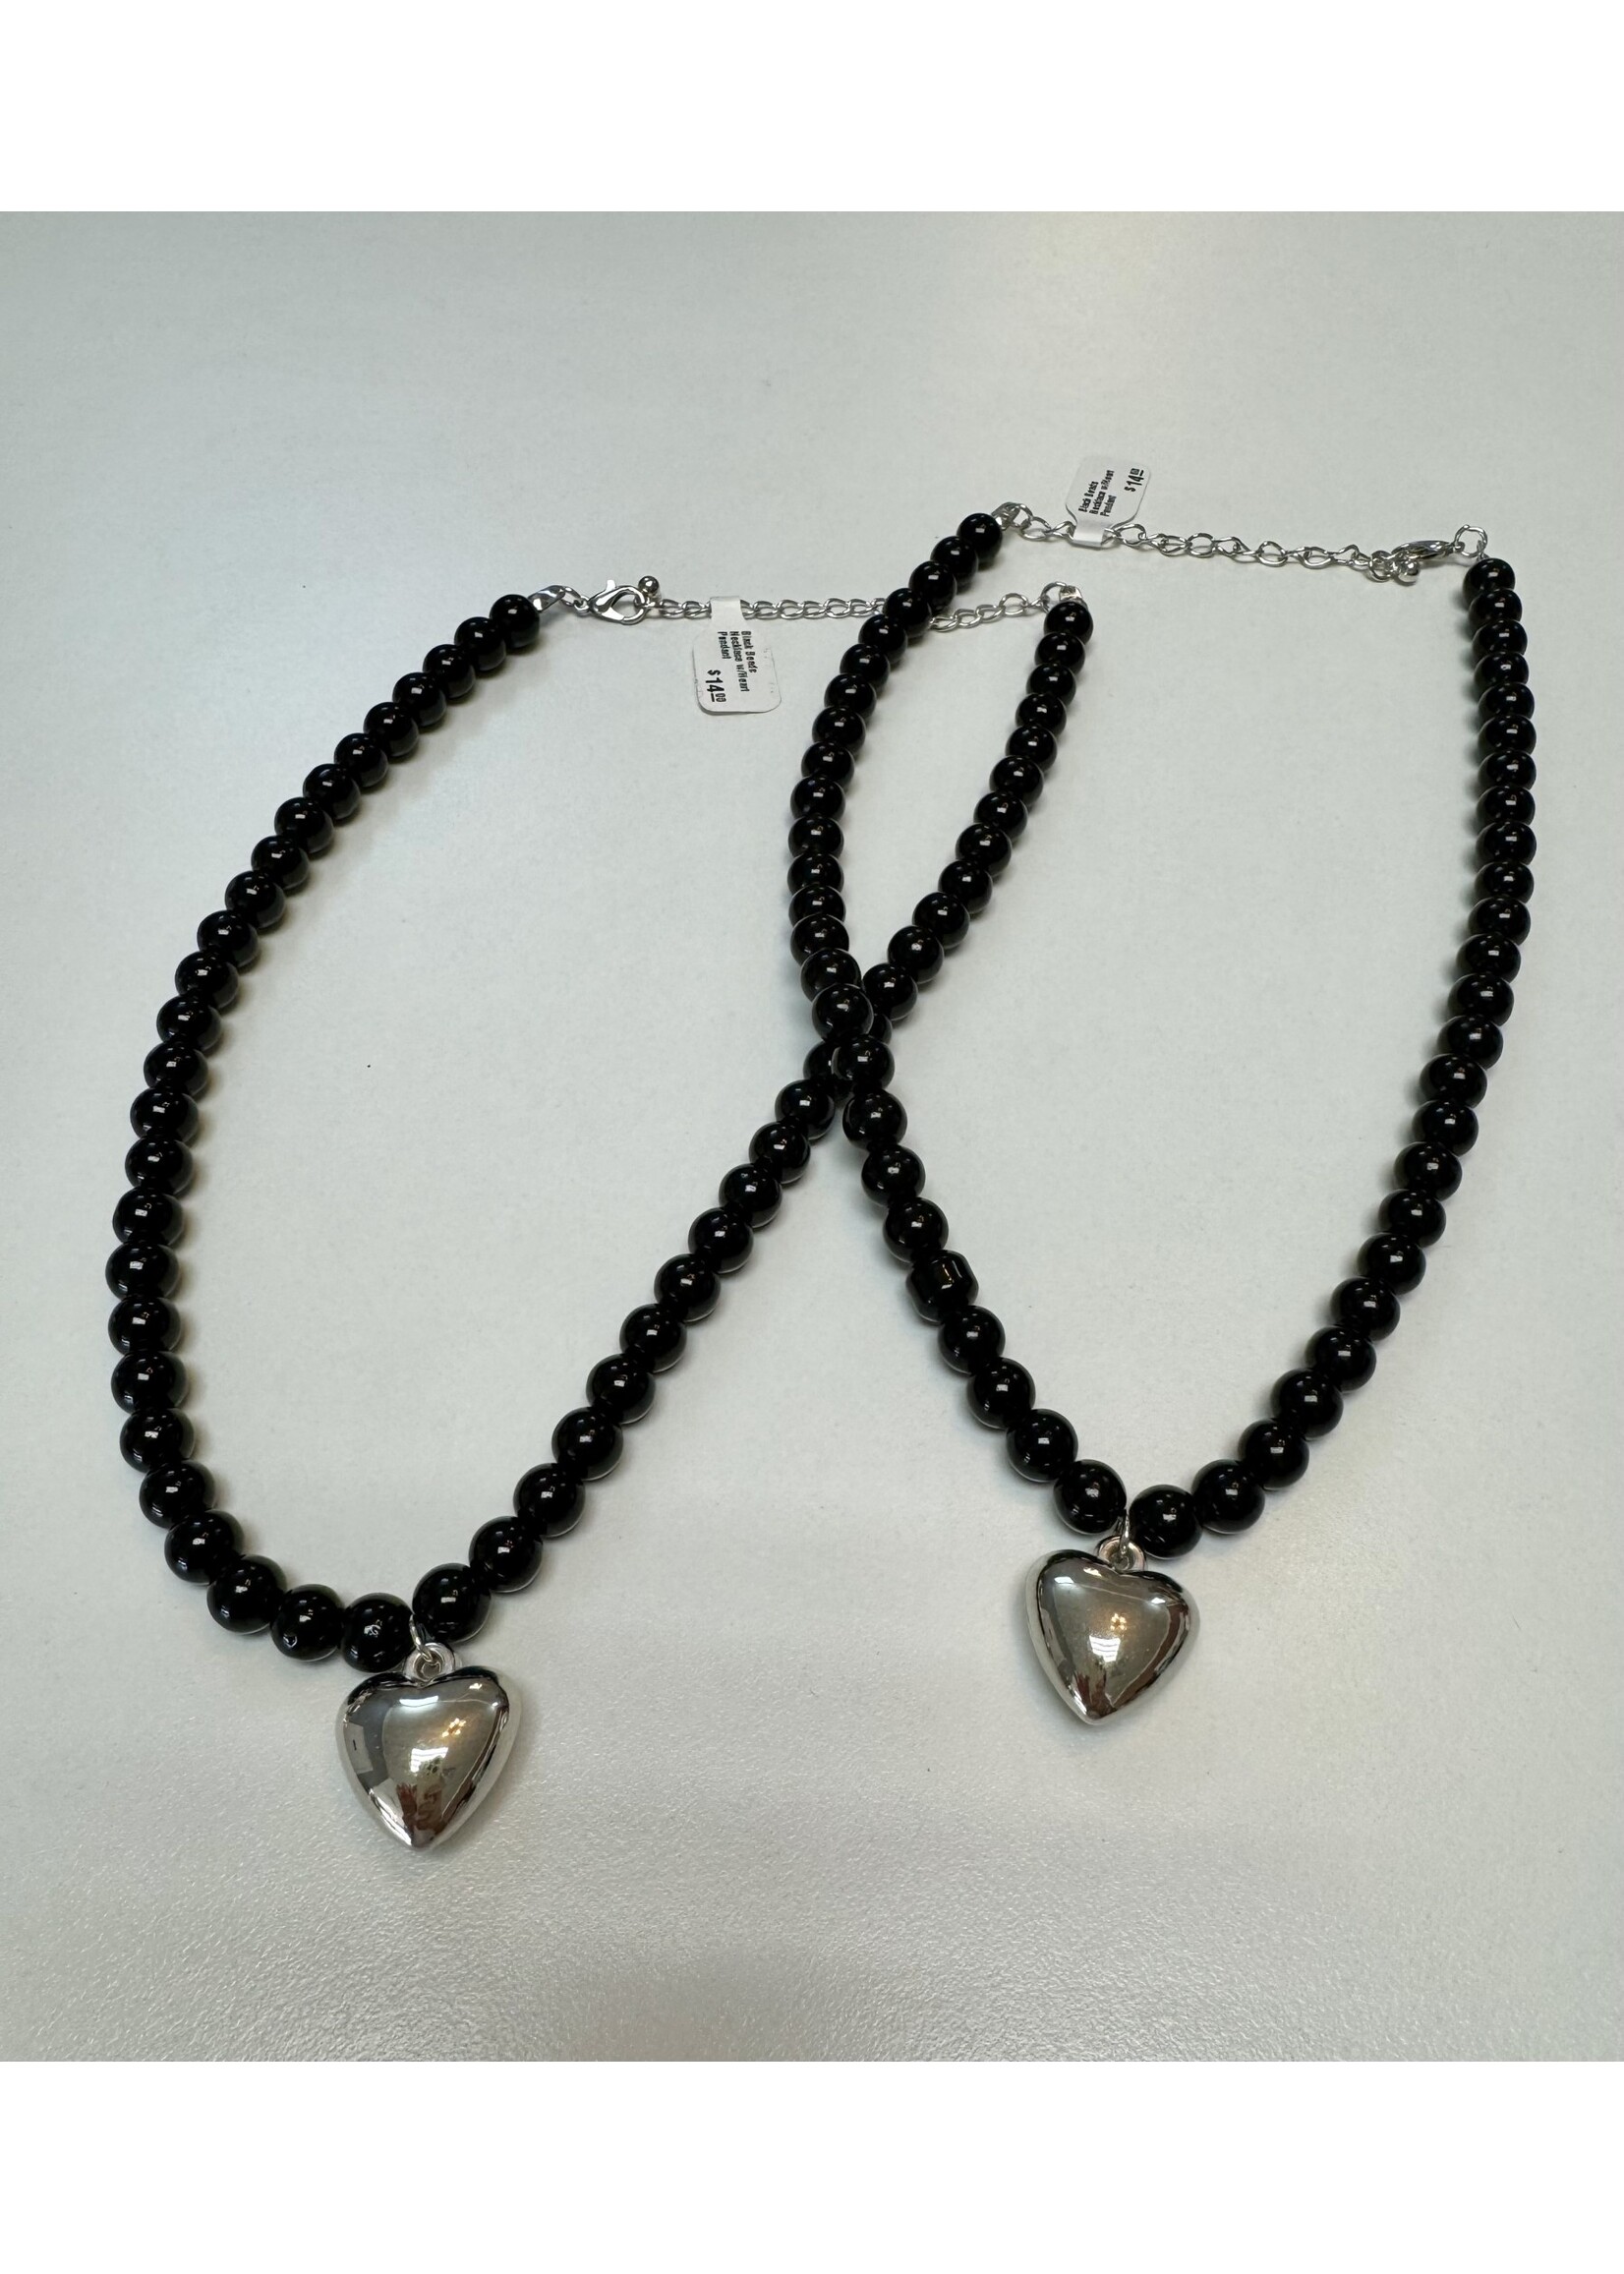 Black Beads Necklace w/Heart Pendant